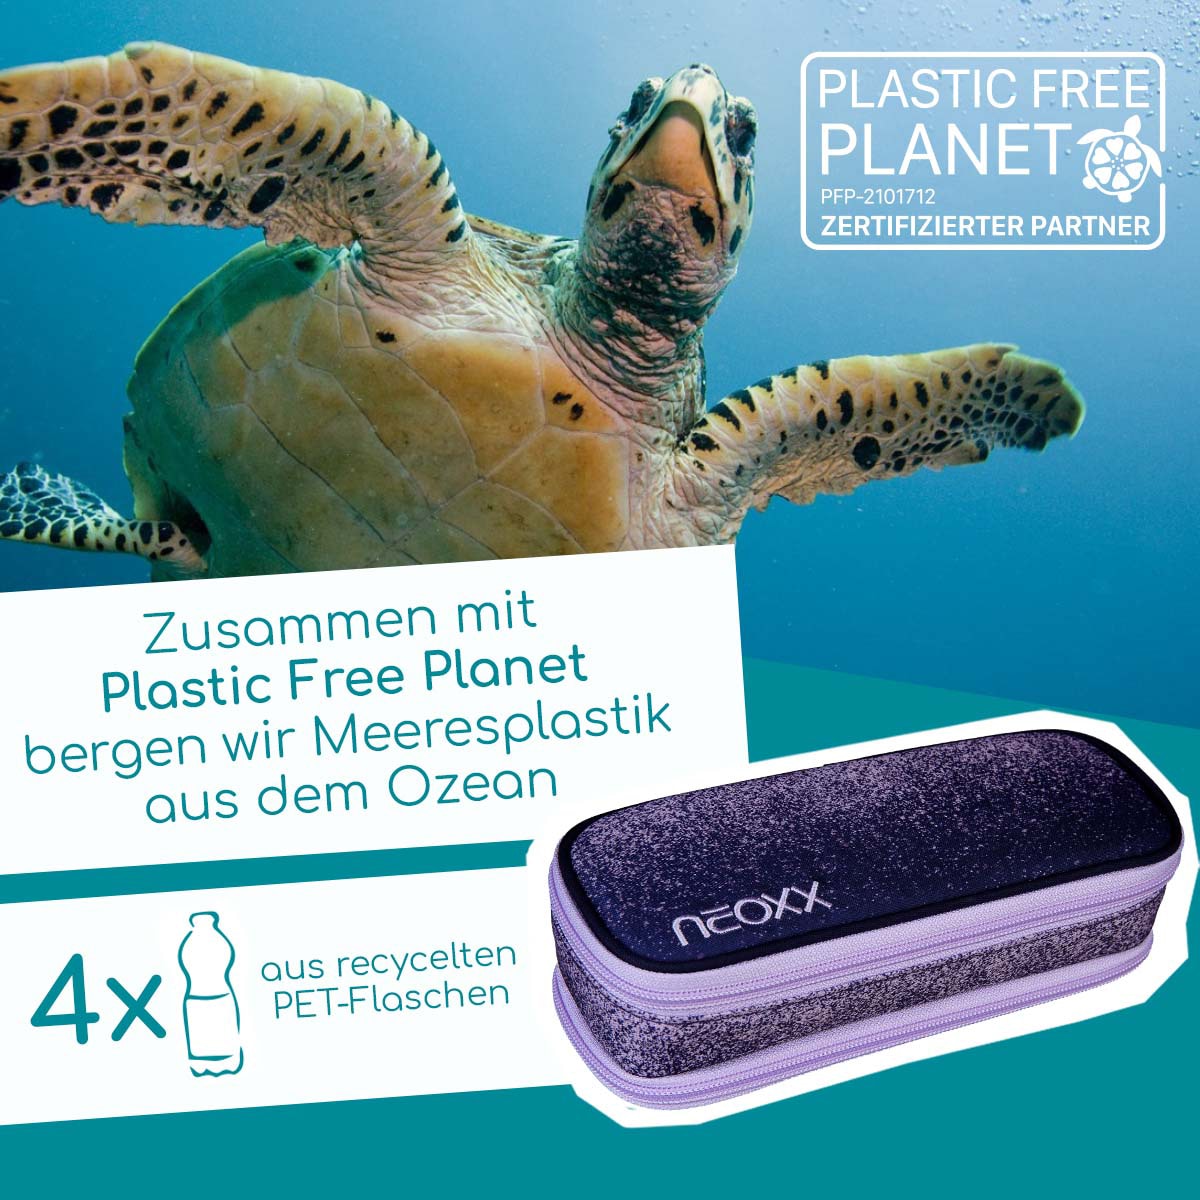 neoxx Schreibgeräteetui »Schlamperbox, Catch, Glitterally perfect«, aus recycelten PET-Flaschen